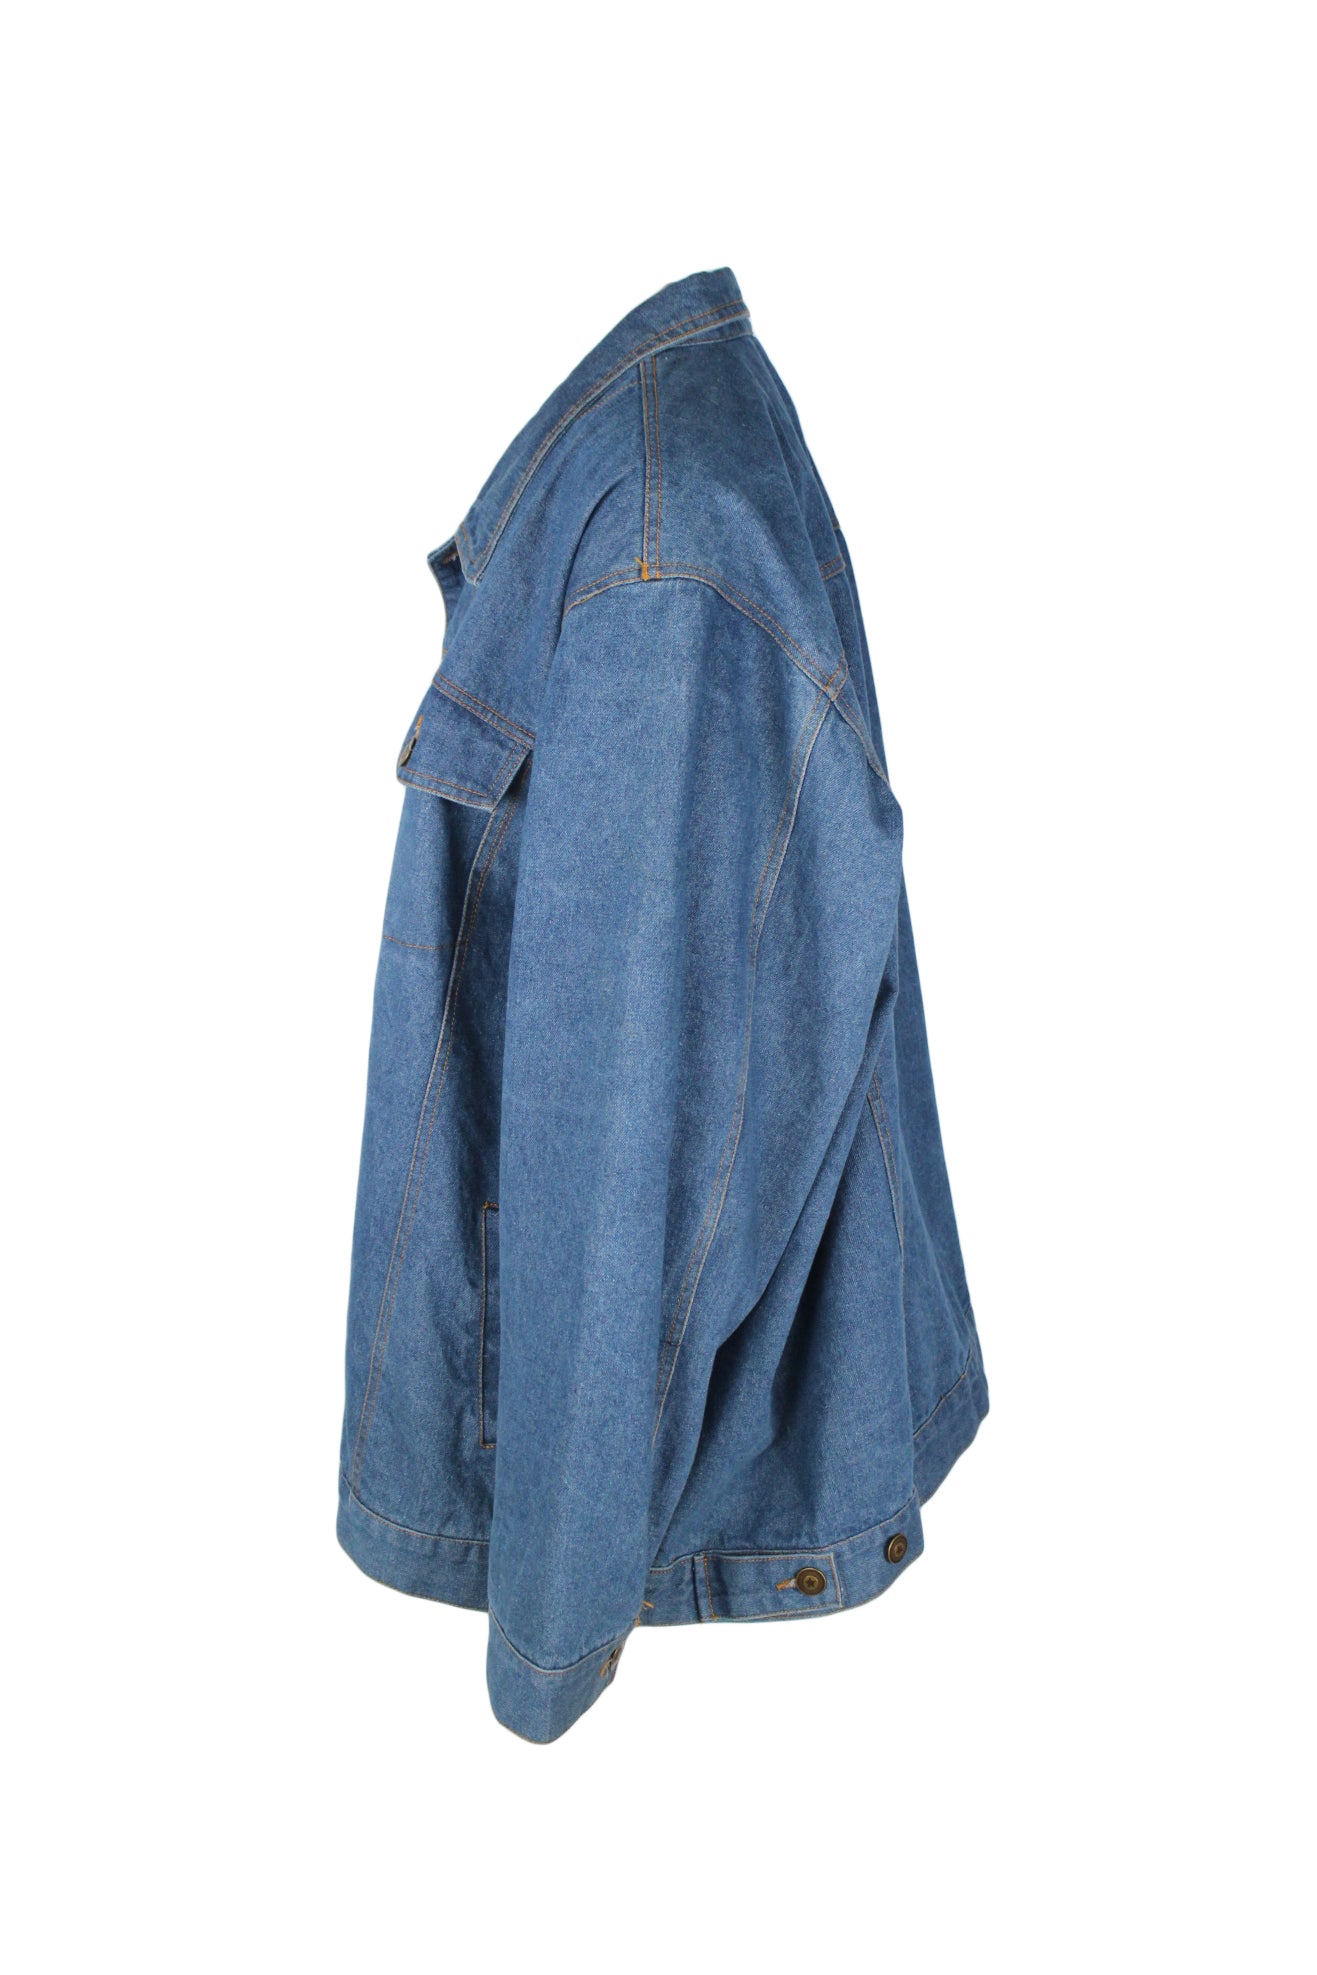 side angle of denim jacket. features adjustable button hem. 